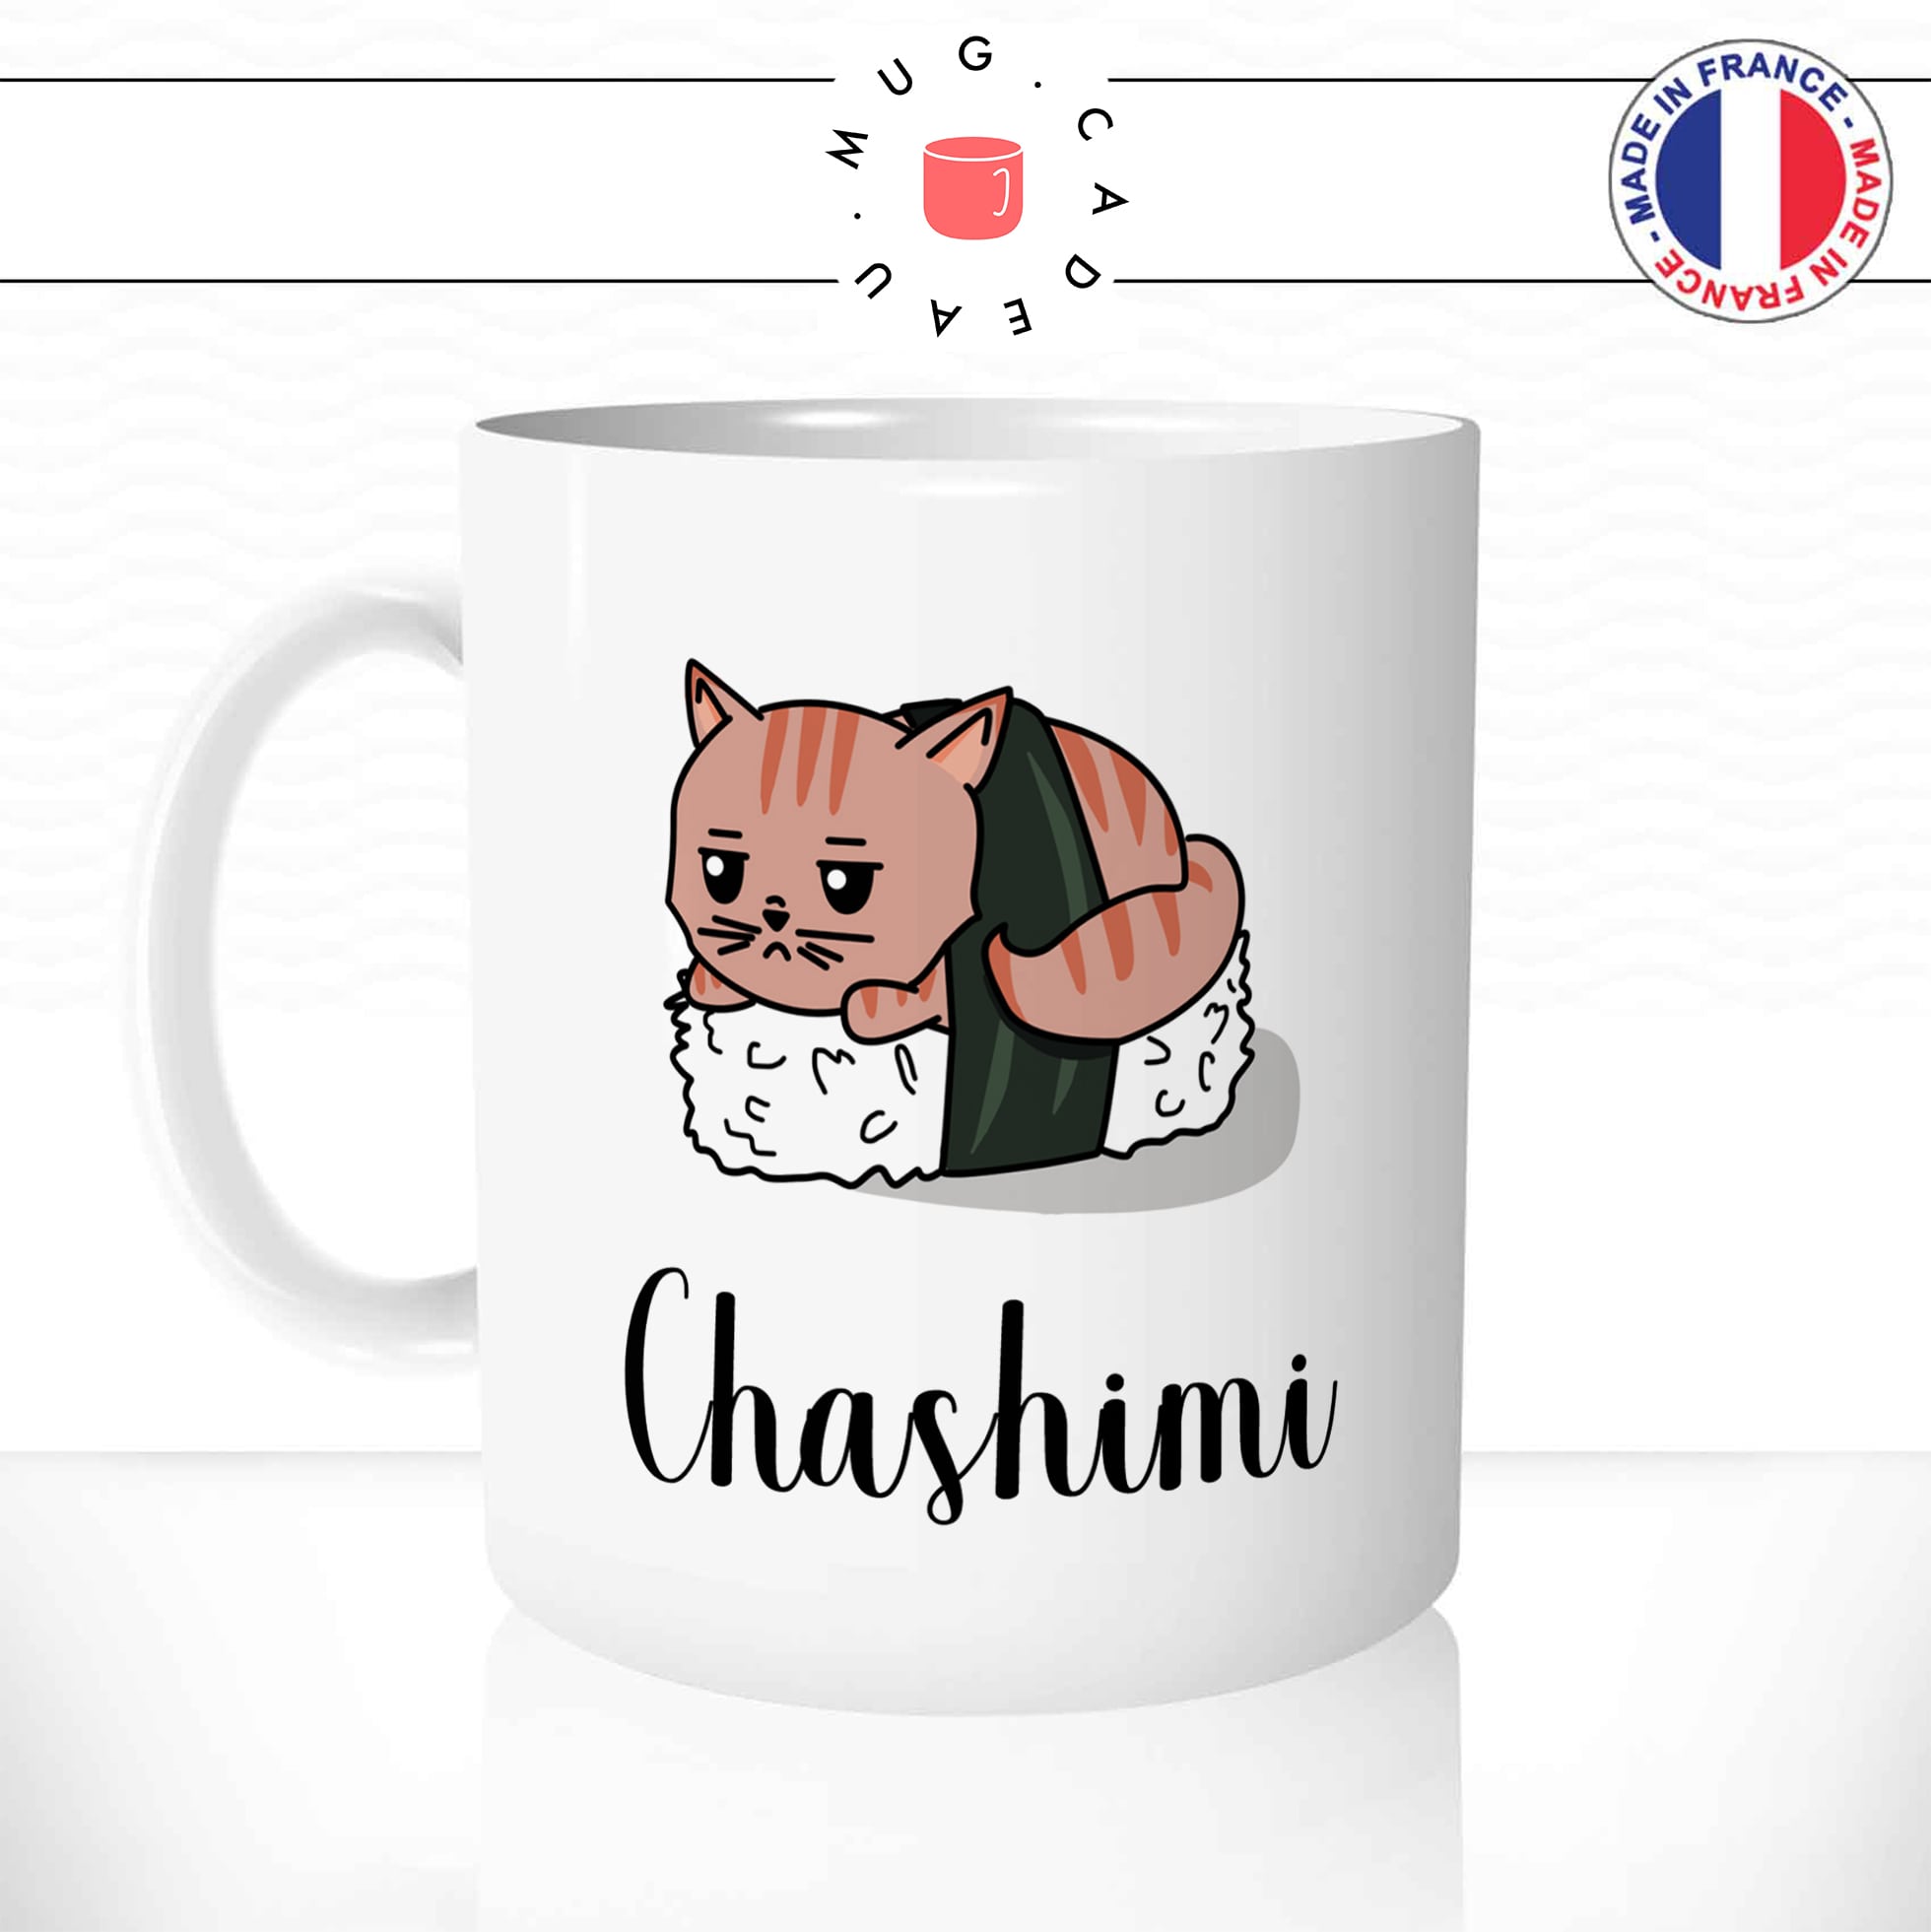 mug-tasse-chatshimi-sashimi-chat-chaton-animal-sushis-saumon-maki-japonais-café-thé-humour-fun-idée-cadeau-original-personnalisée-min